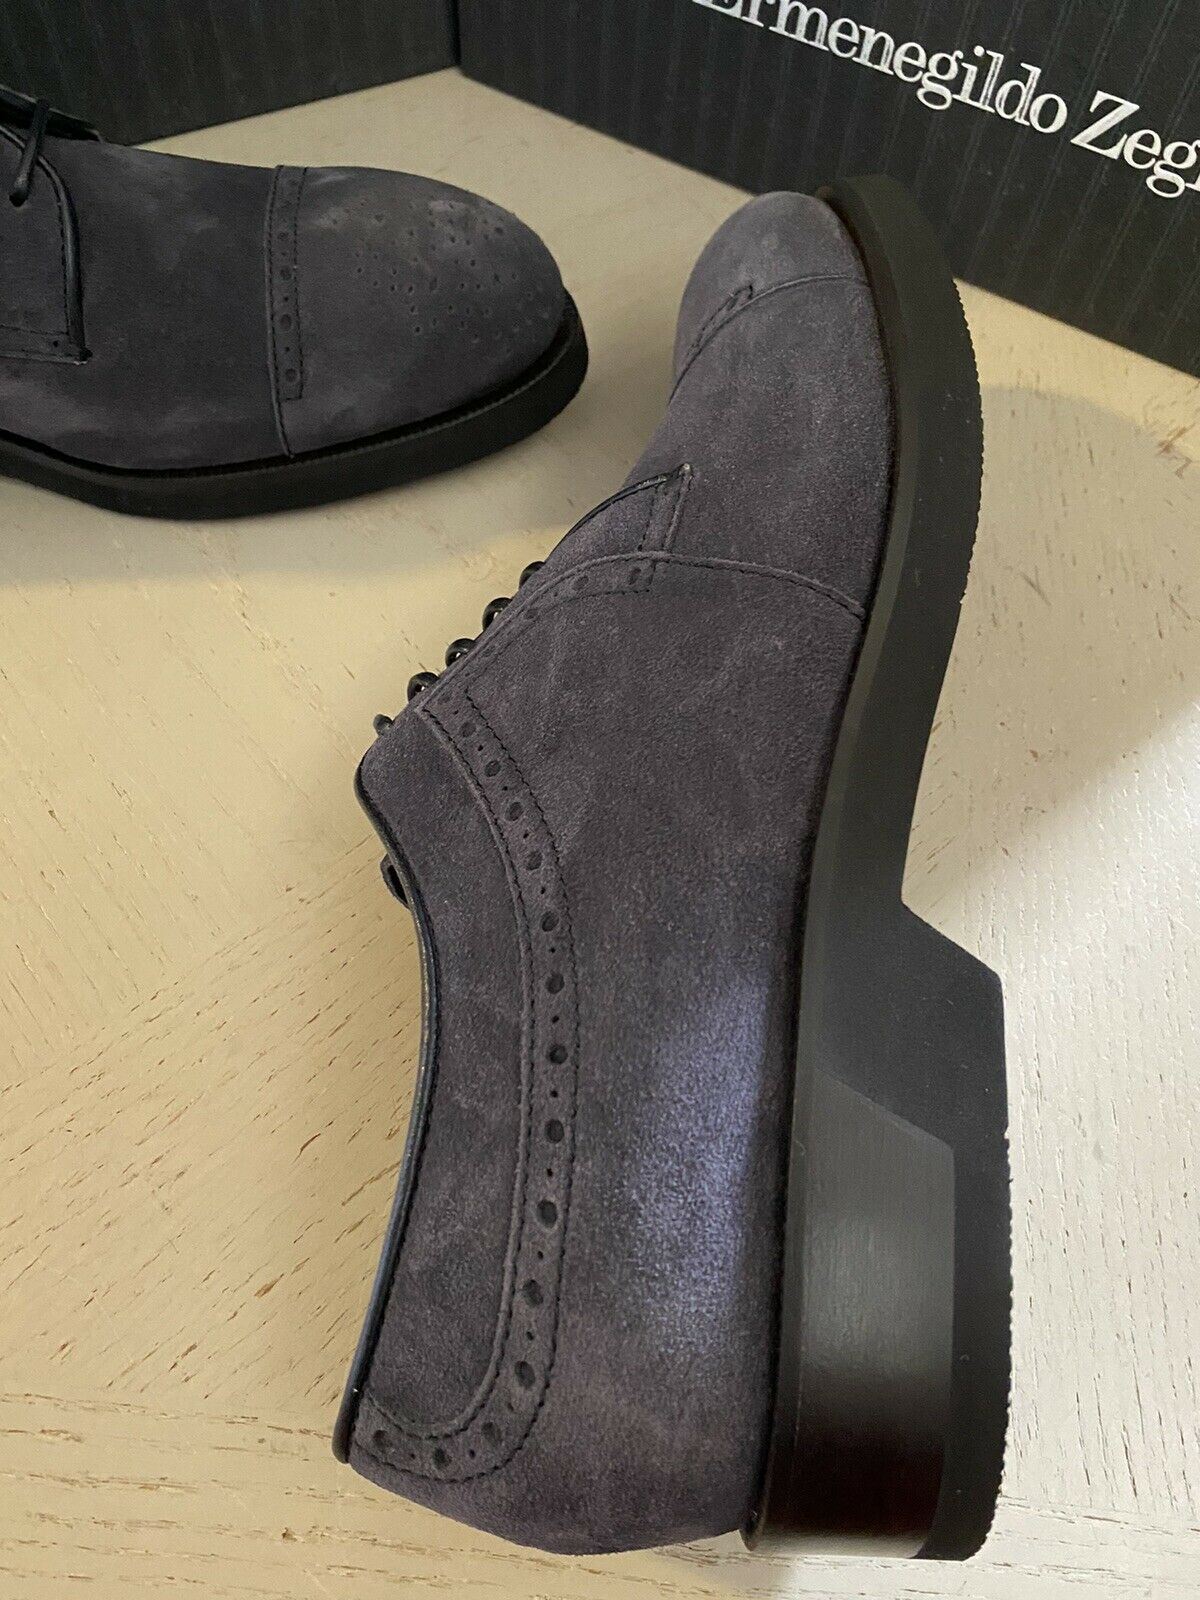 New $695 Ermenegildo Zegna Suede/Leather Shoes Navy/Blue 11 US Italy